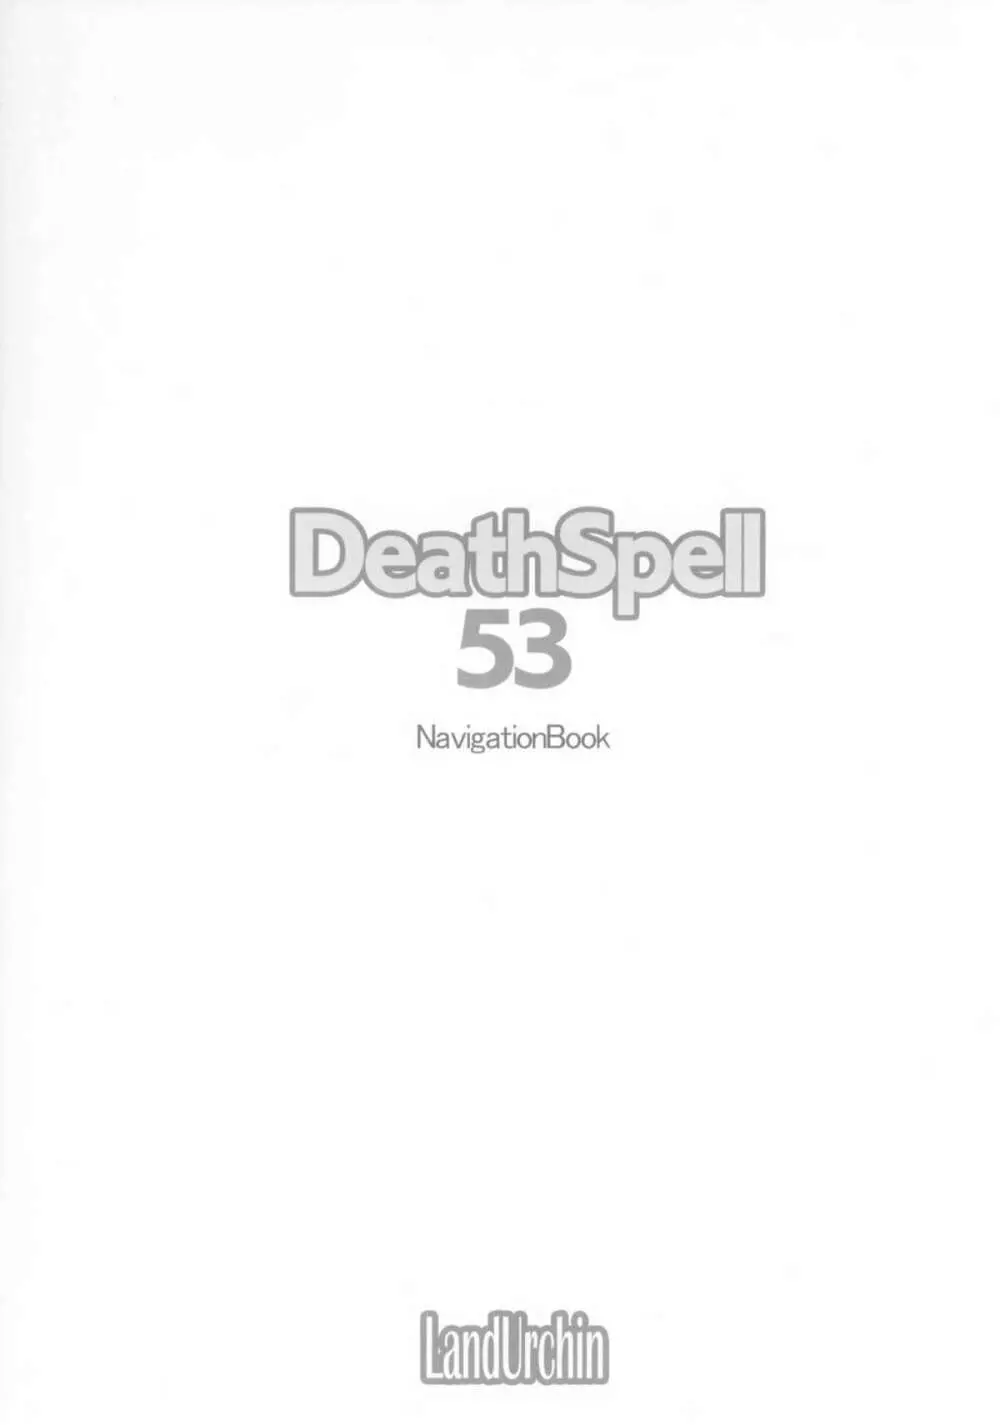 DeathSpell 53 NavigationBook 2ページ